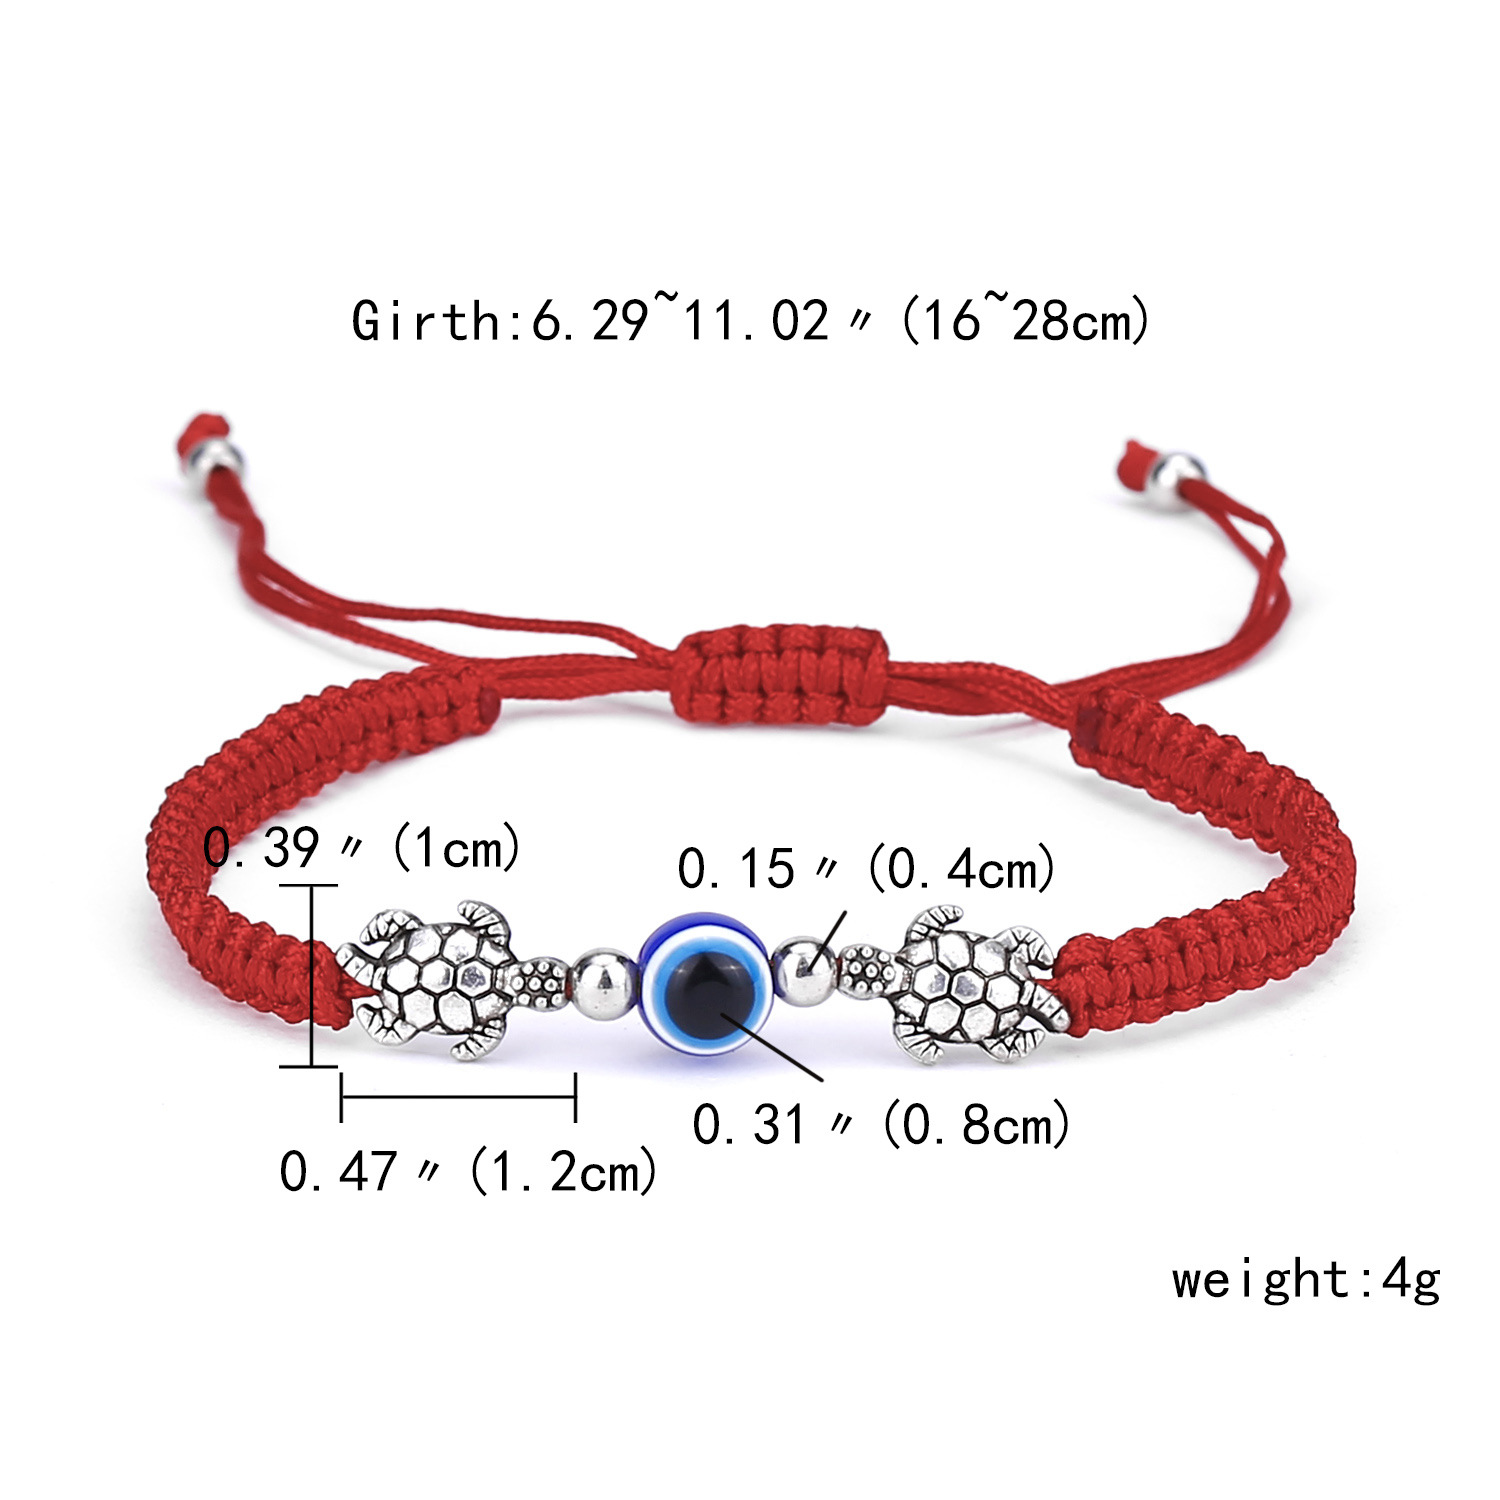 Mode verstellbares Armband kreatives neues blaues Auge Armband bses Auge rotes Seil geflochtenes Armbandpicture5